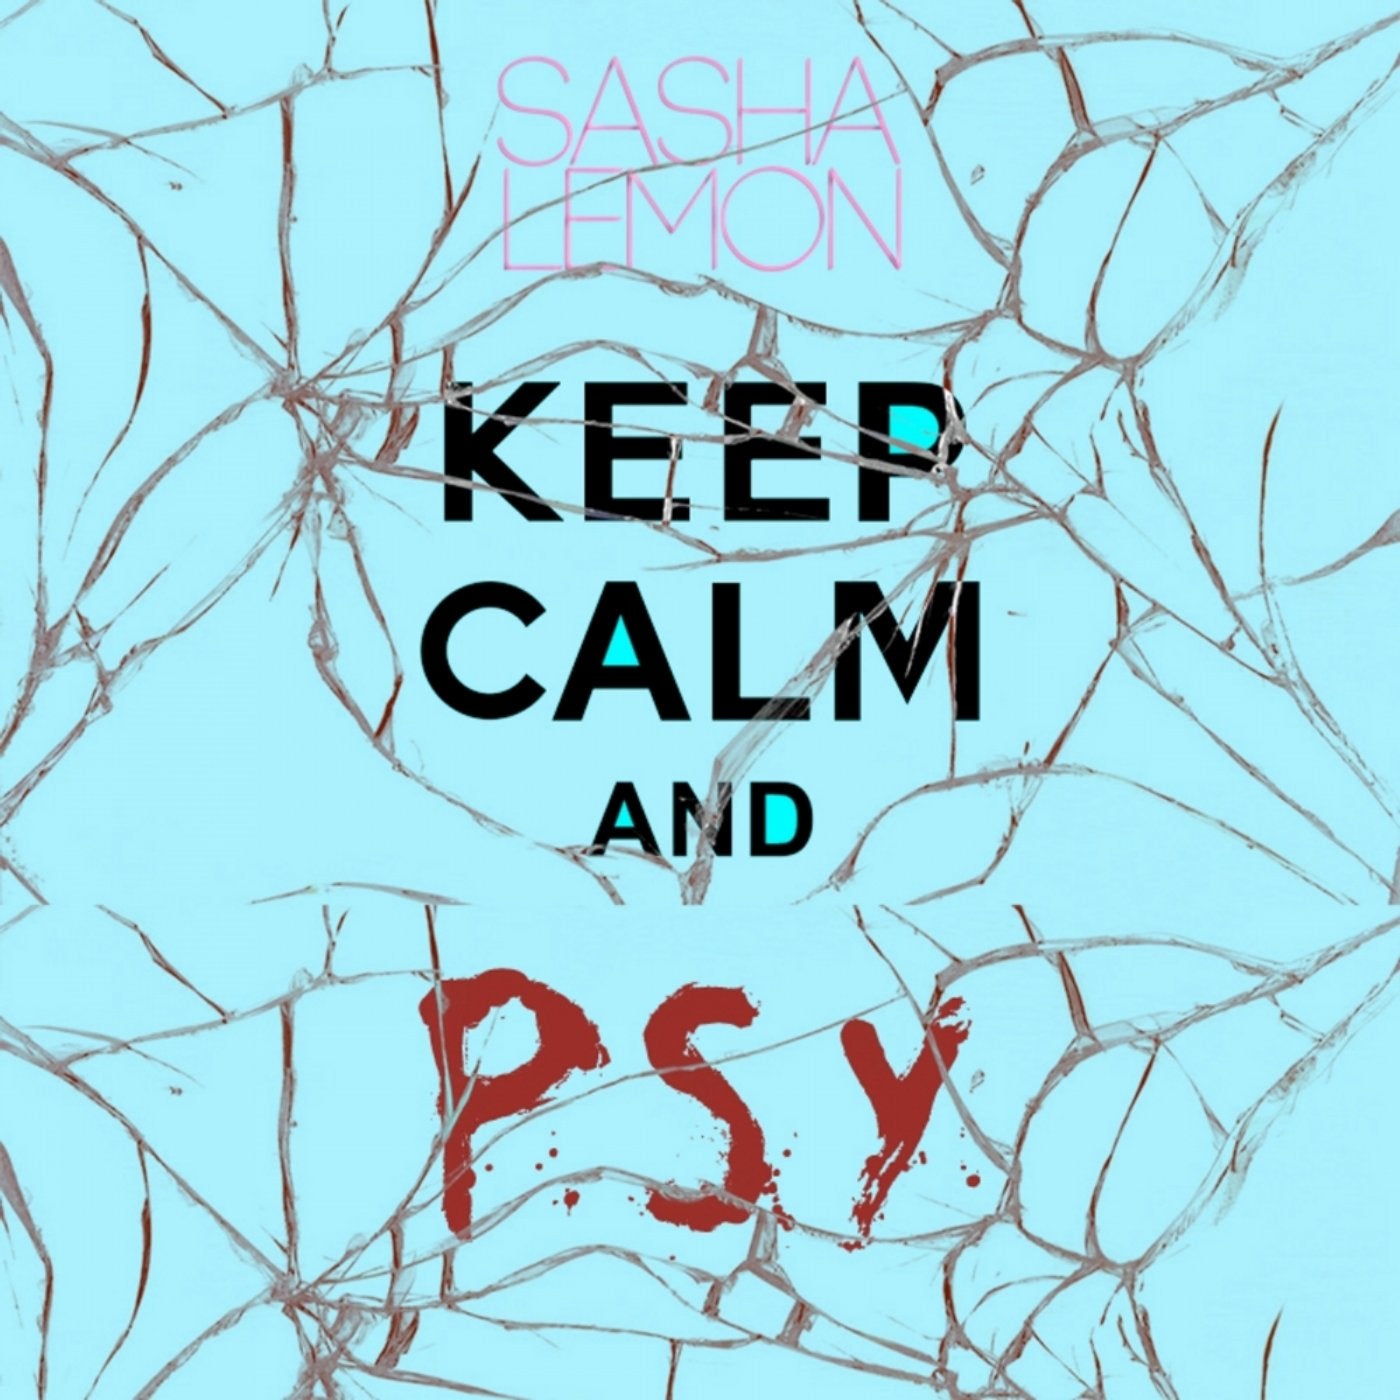 Keep Calm & Psy